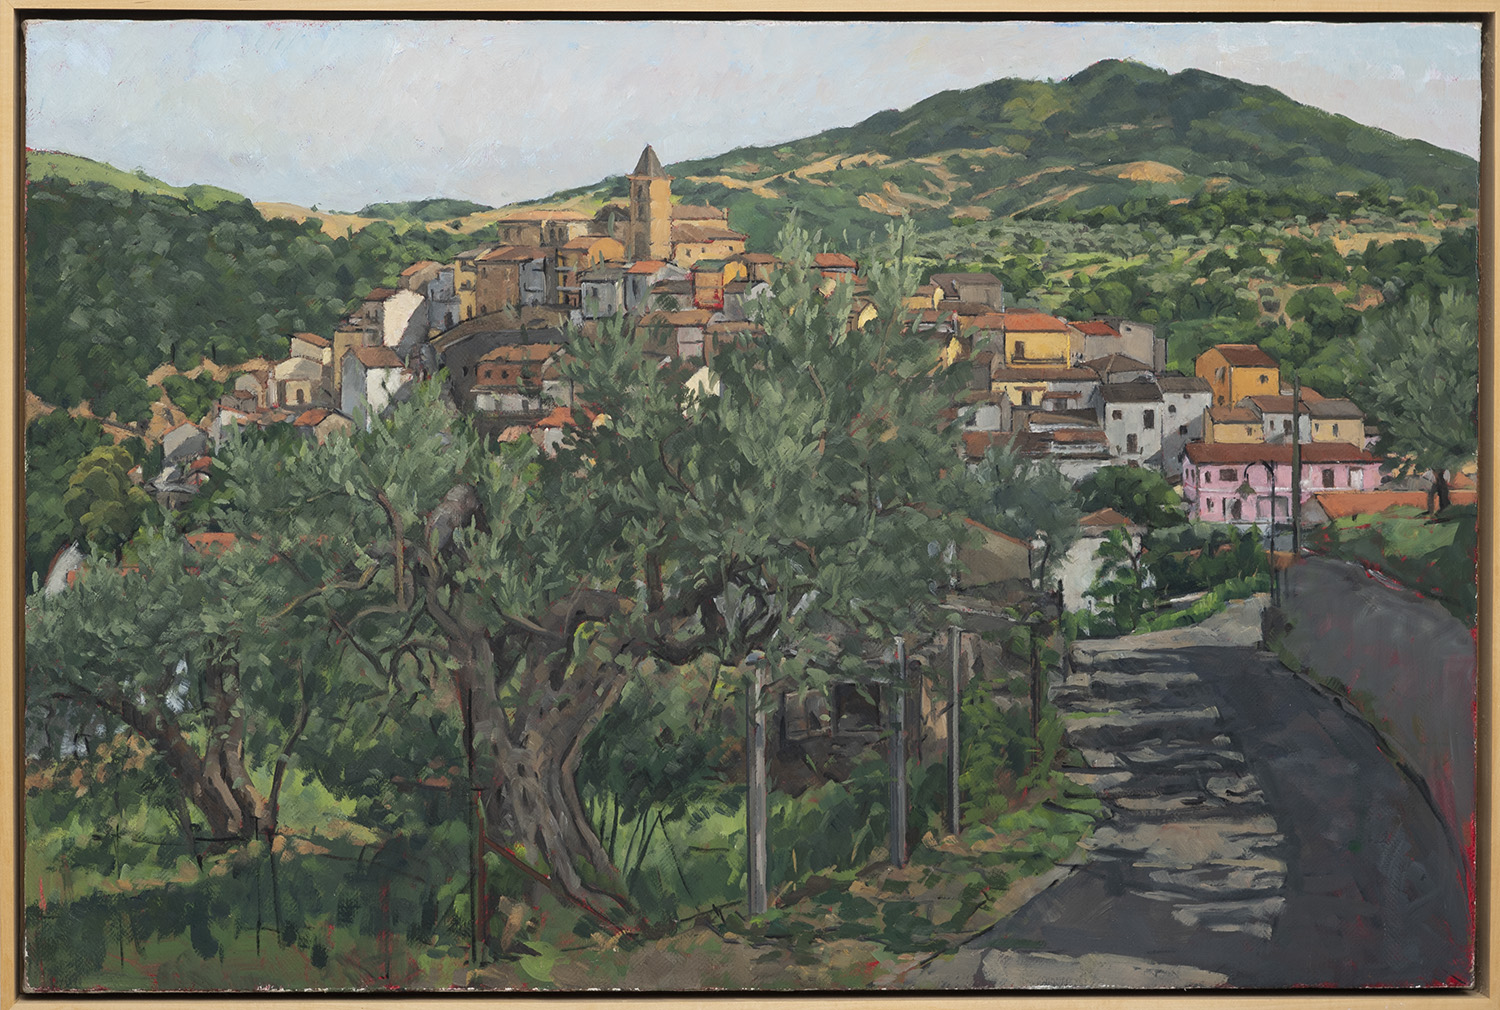 Oliveto Lucano by Frederick Ortner (larger)